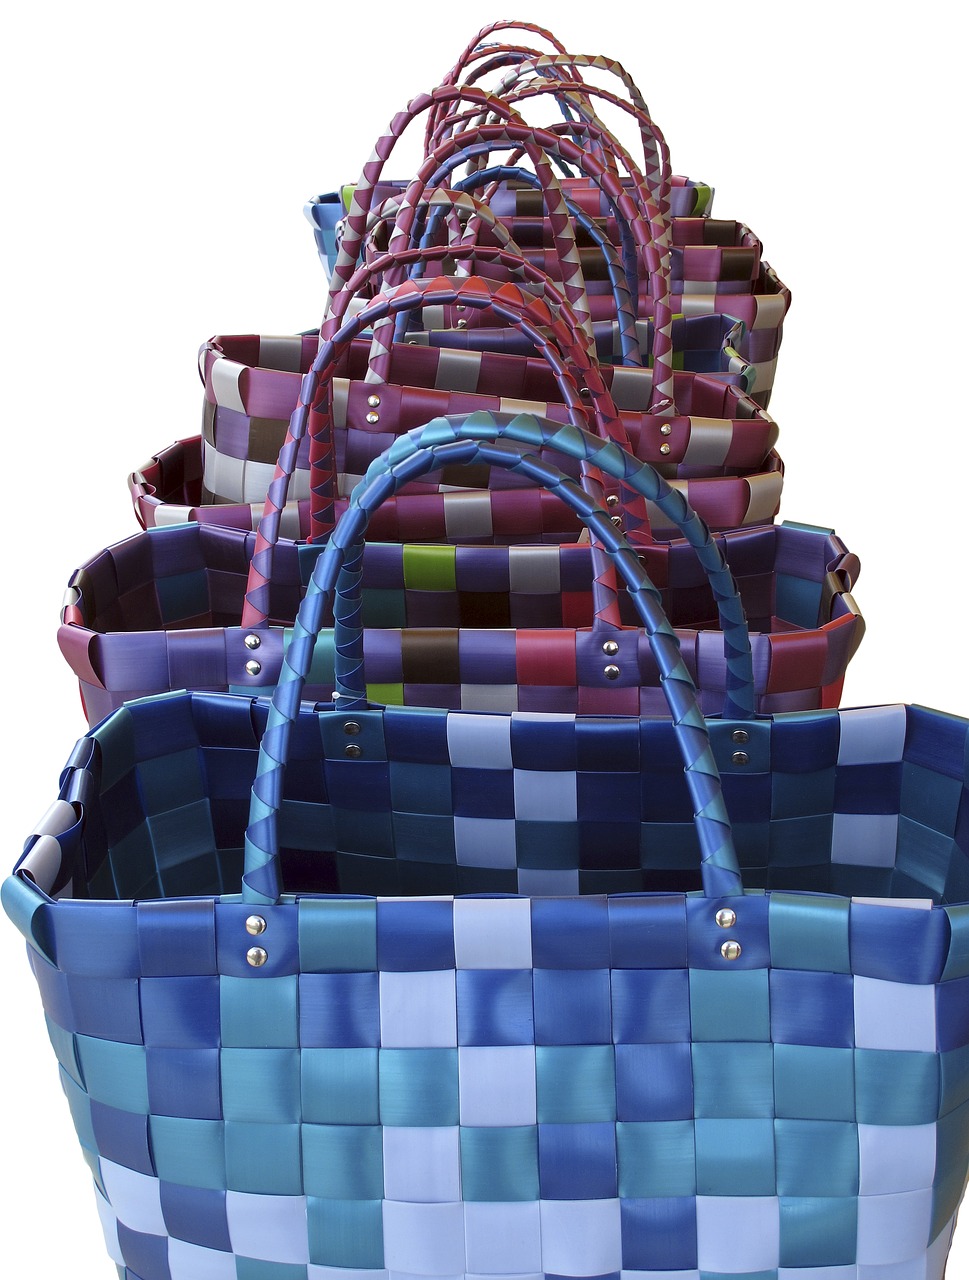 bag basket woven free photo